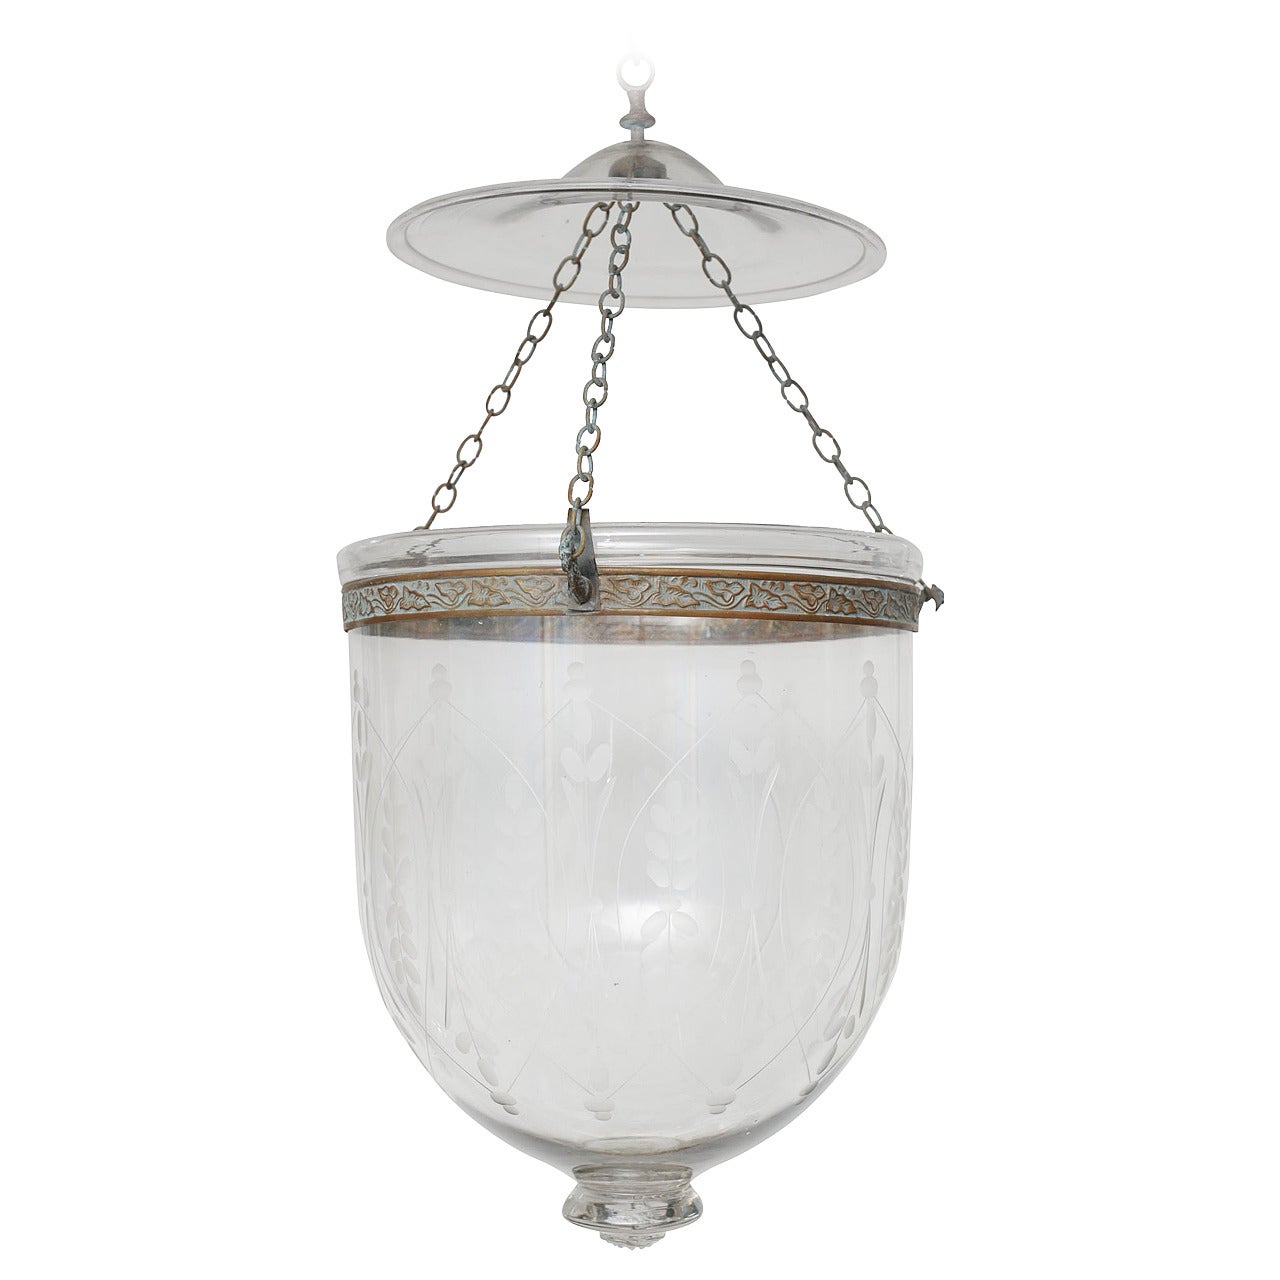 Late 19th Century Bell Jar Hall Lantern, English, Electrified